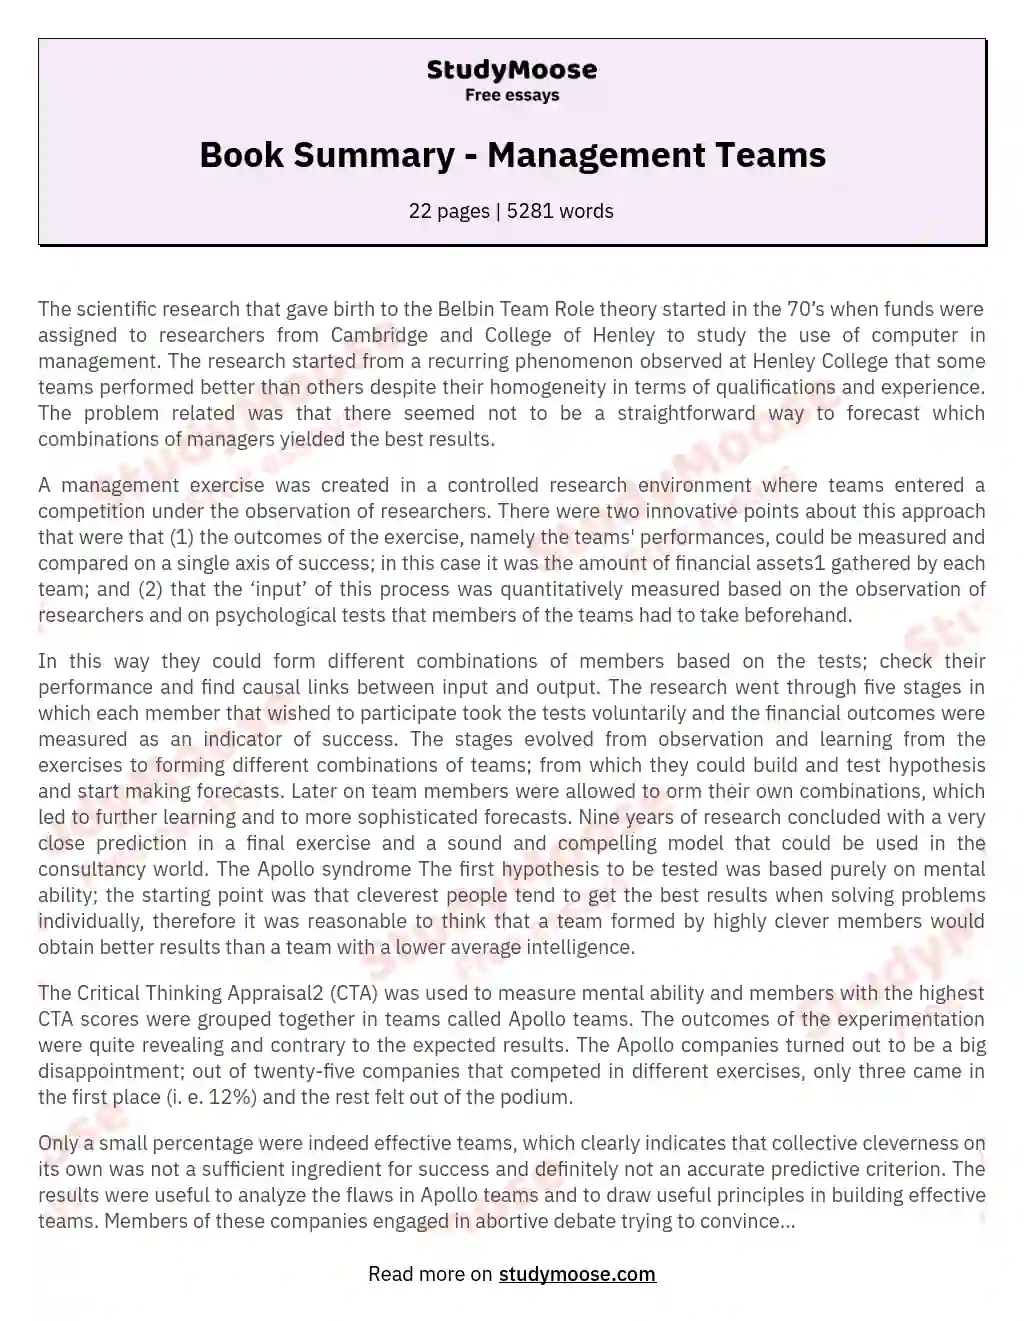 Book Summary - Management Teams essay